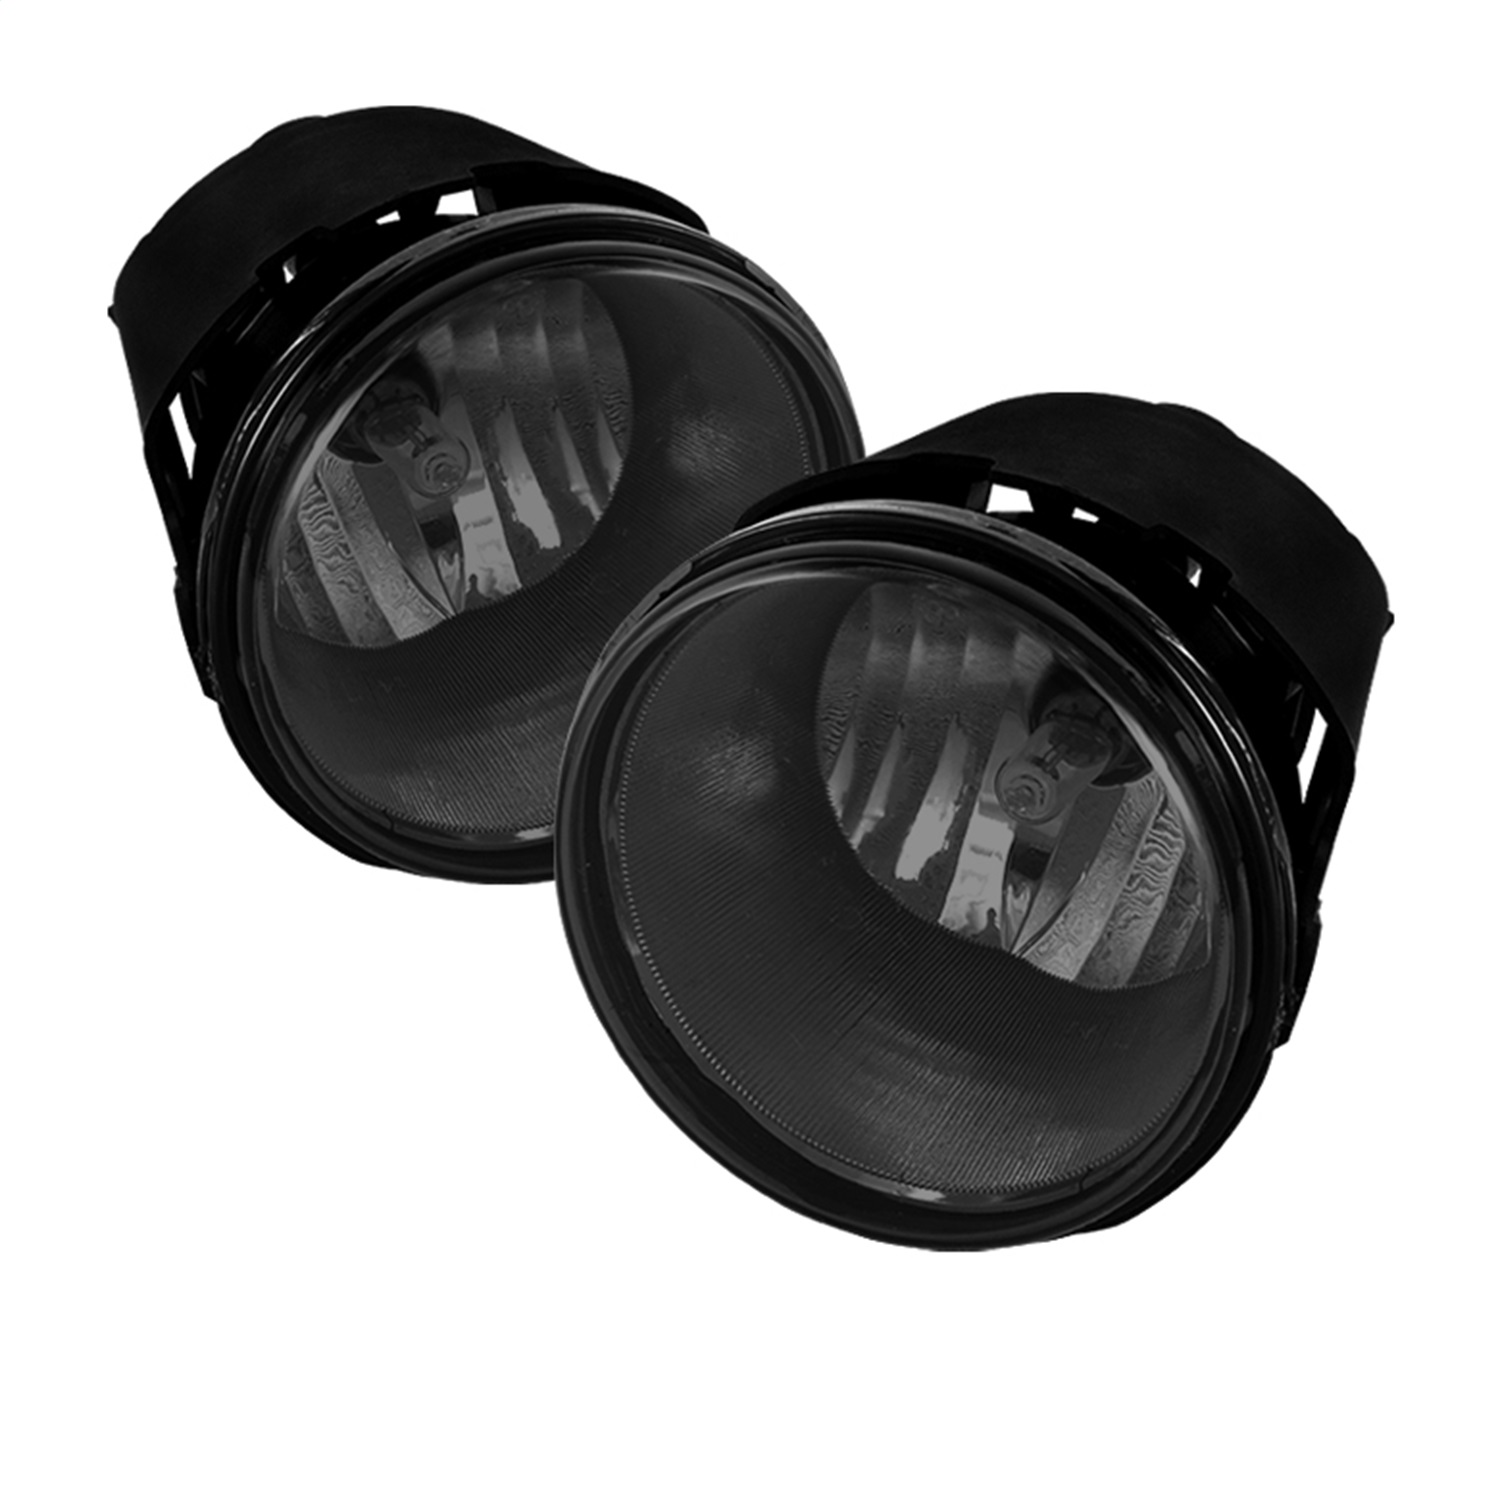 Spyder Auto 5039002 Fog Lights